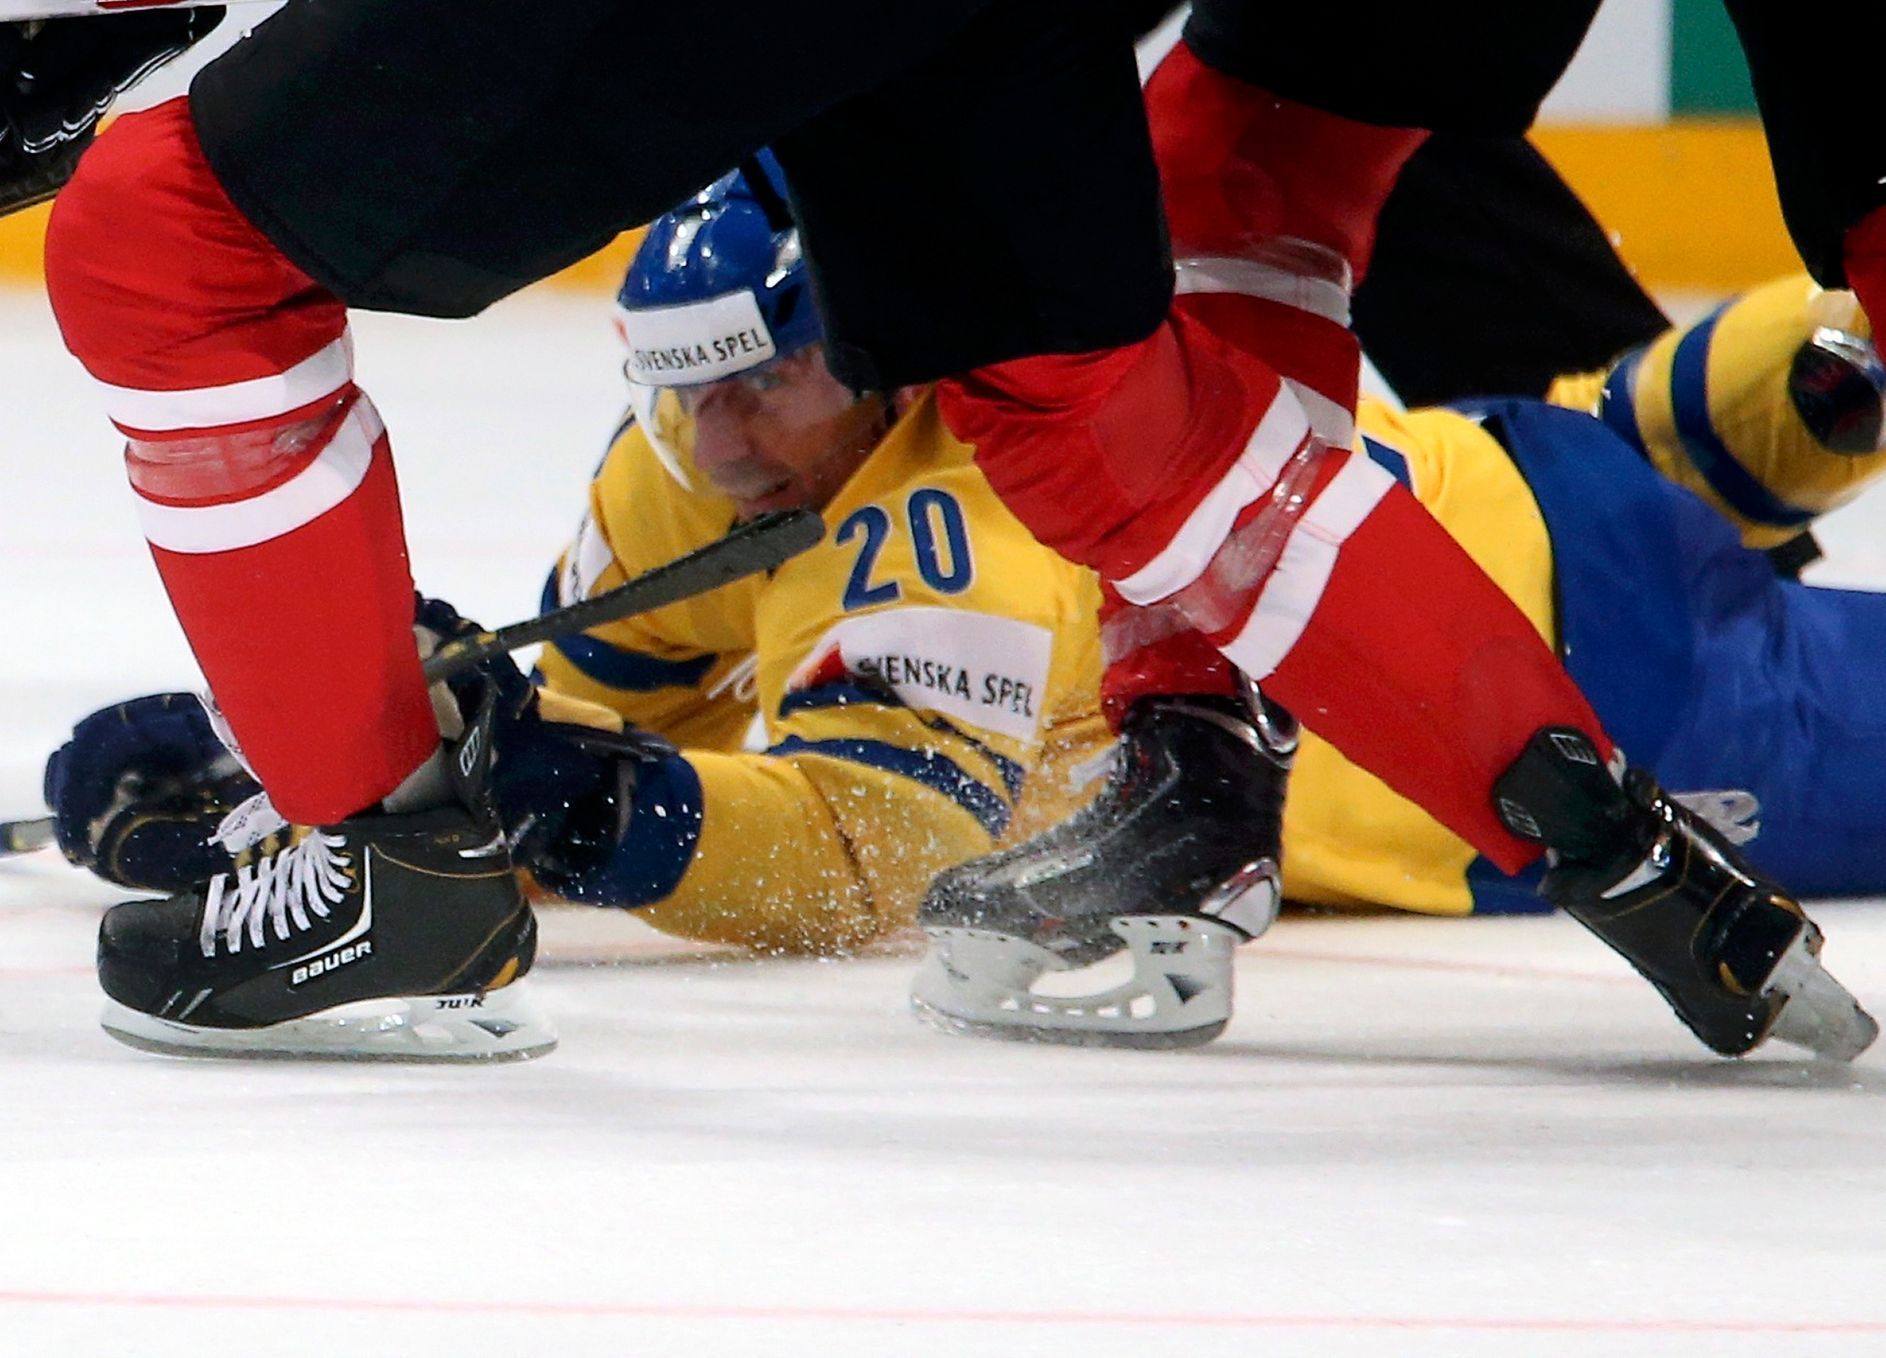 Hokej, MS 2013, Kanada - Švédsko: Joel Lundqvist (20)